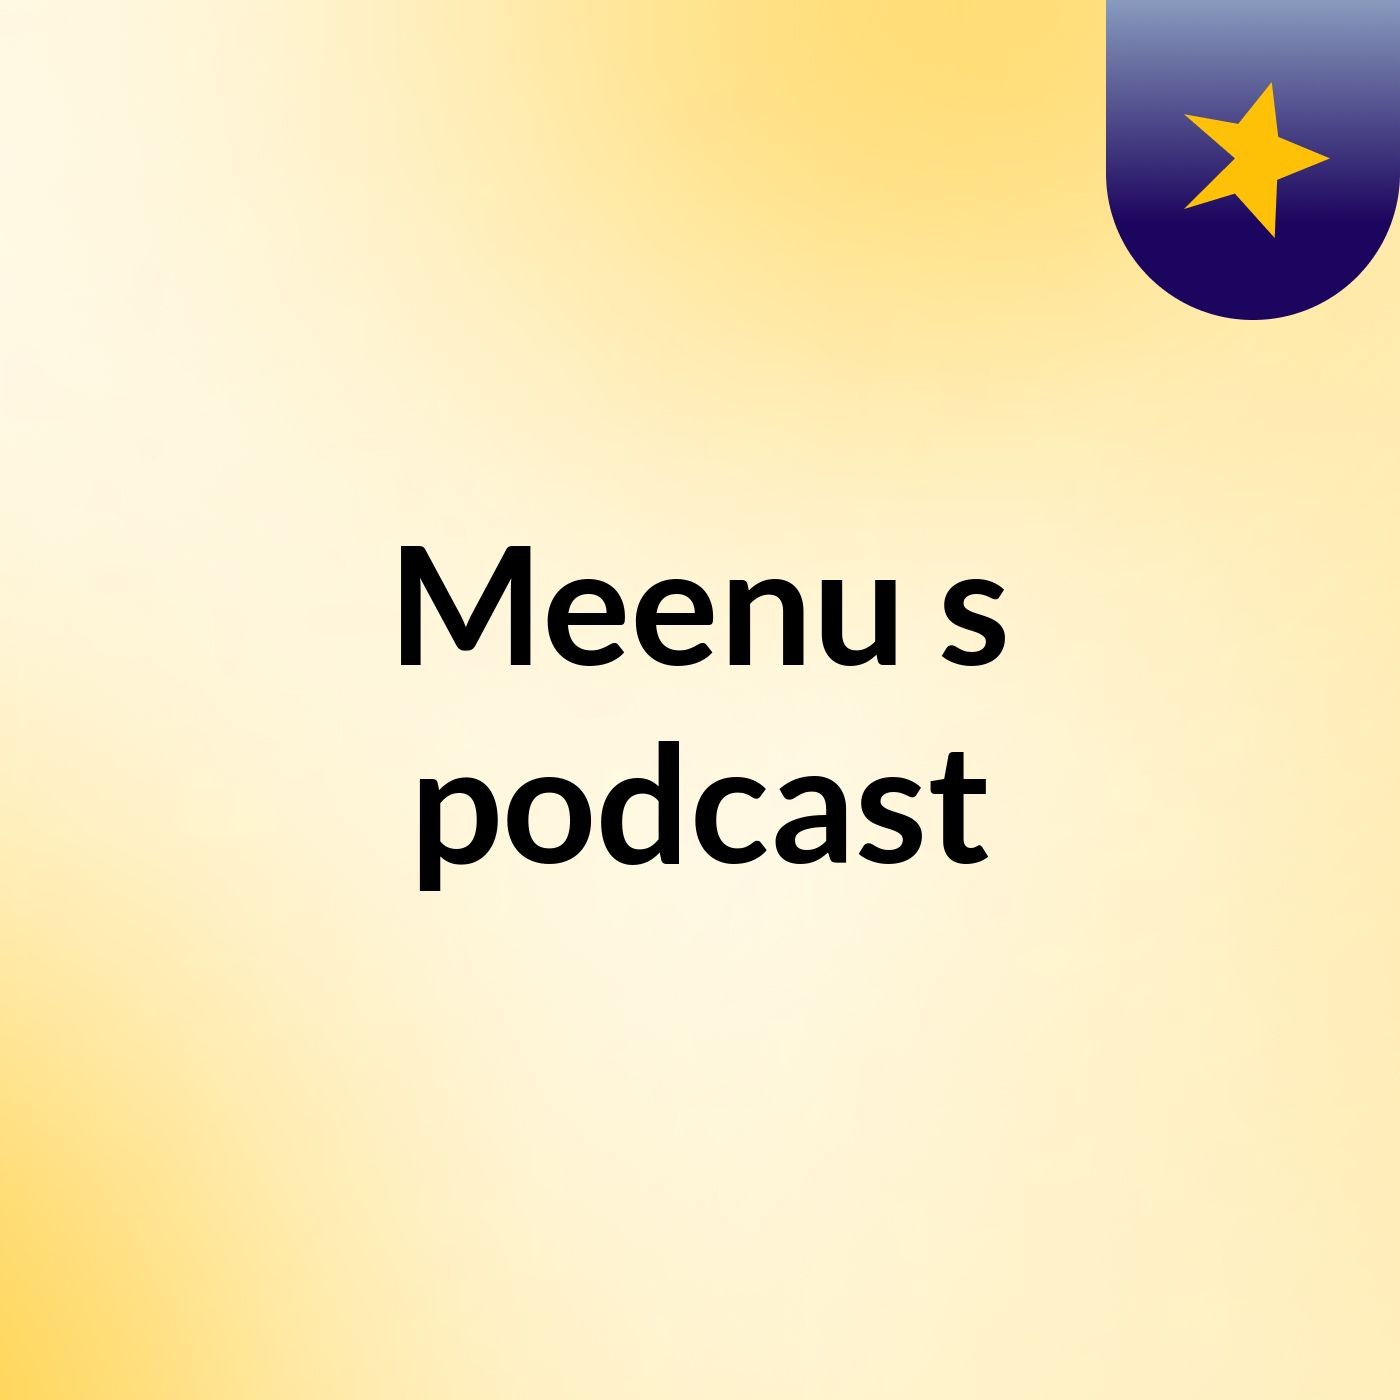 Meenu's podcast